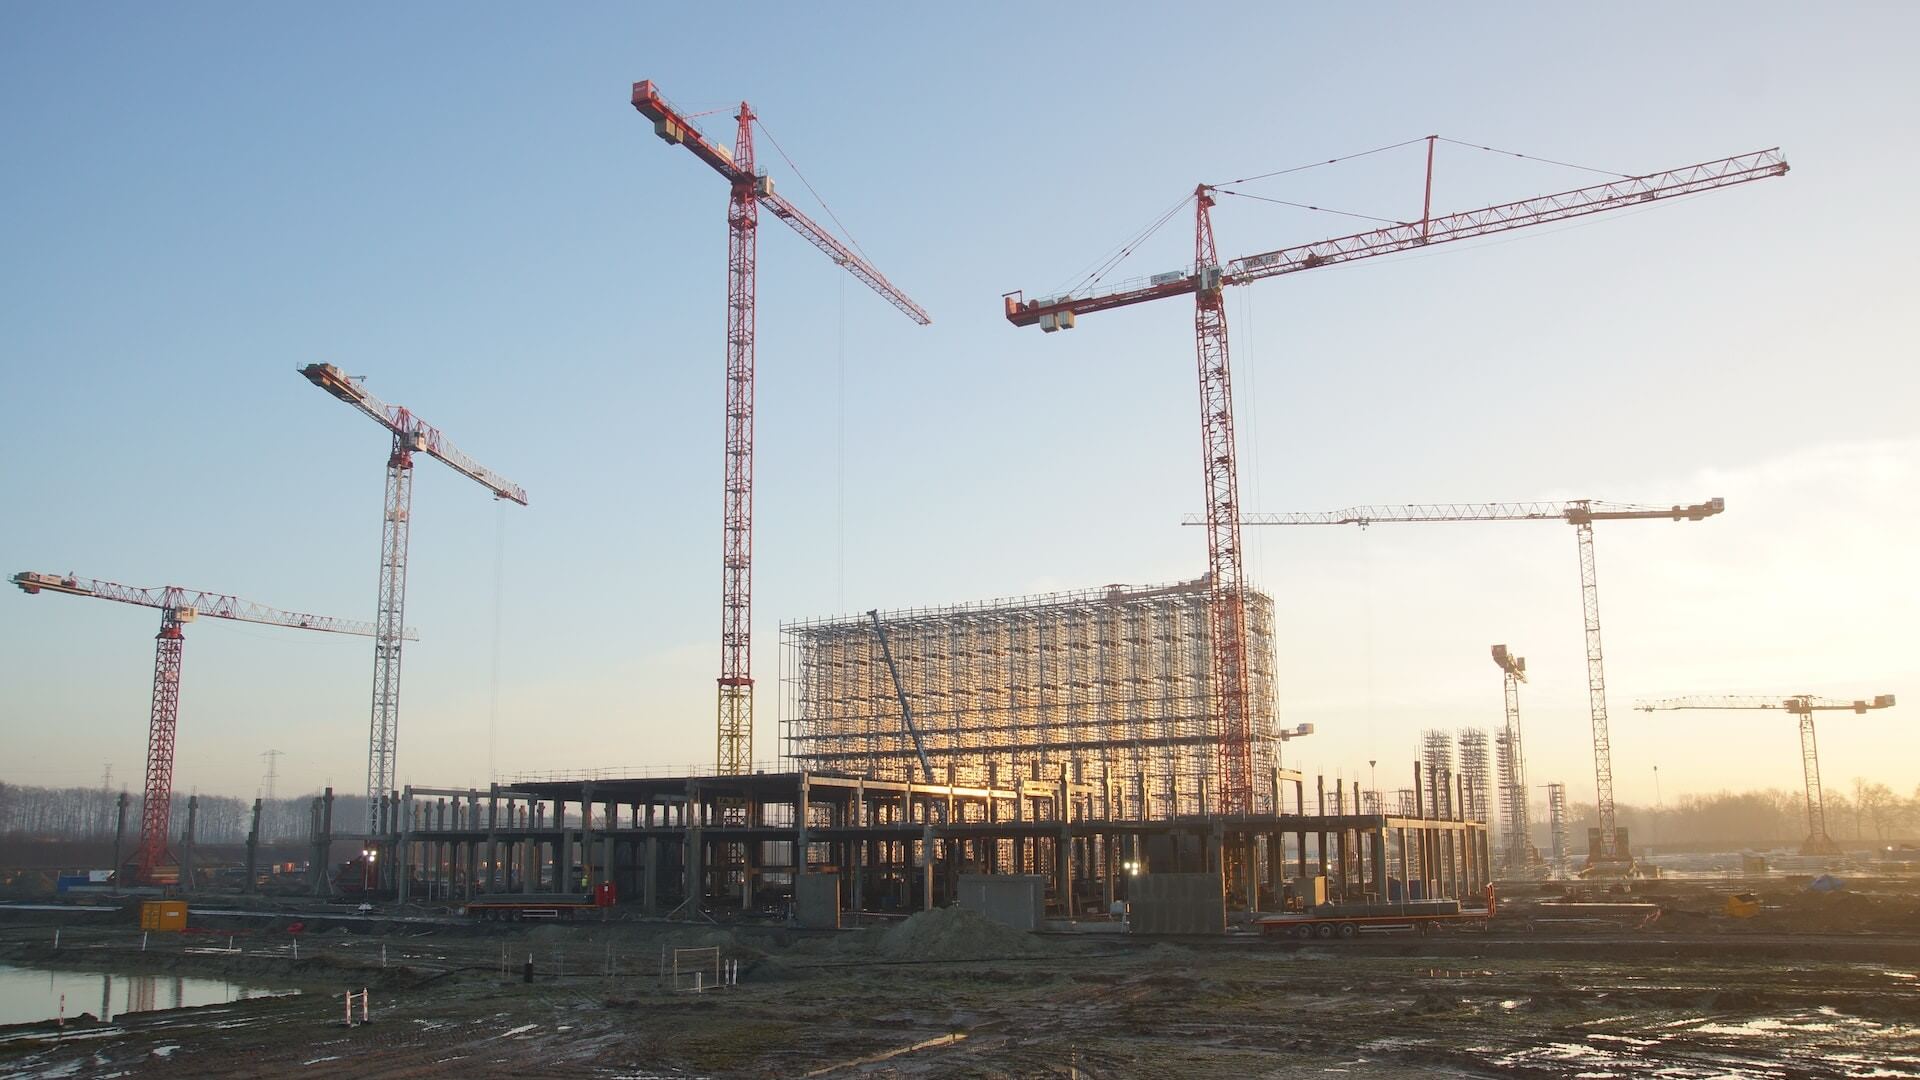 Large cranes constructing building, set against sky